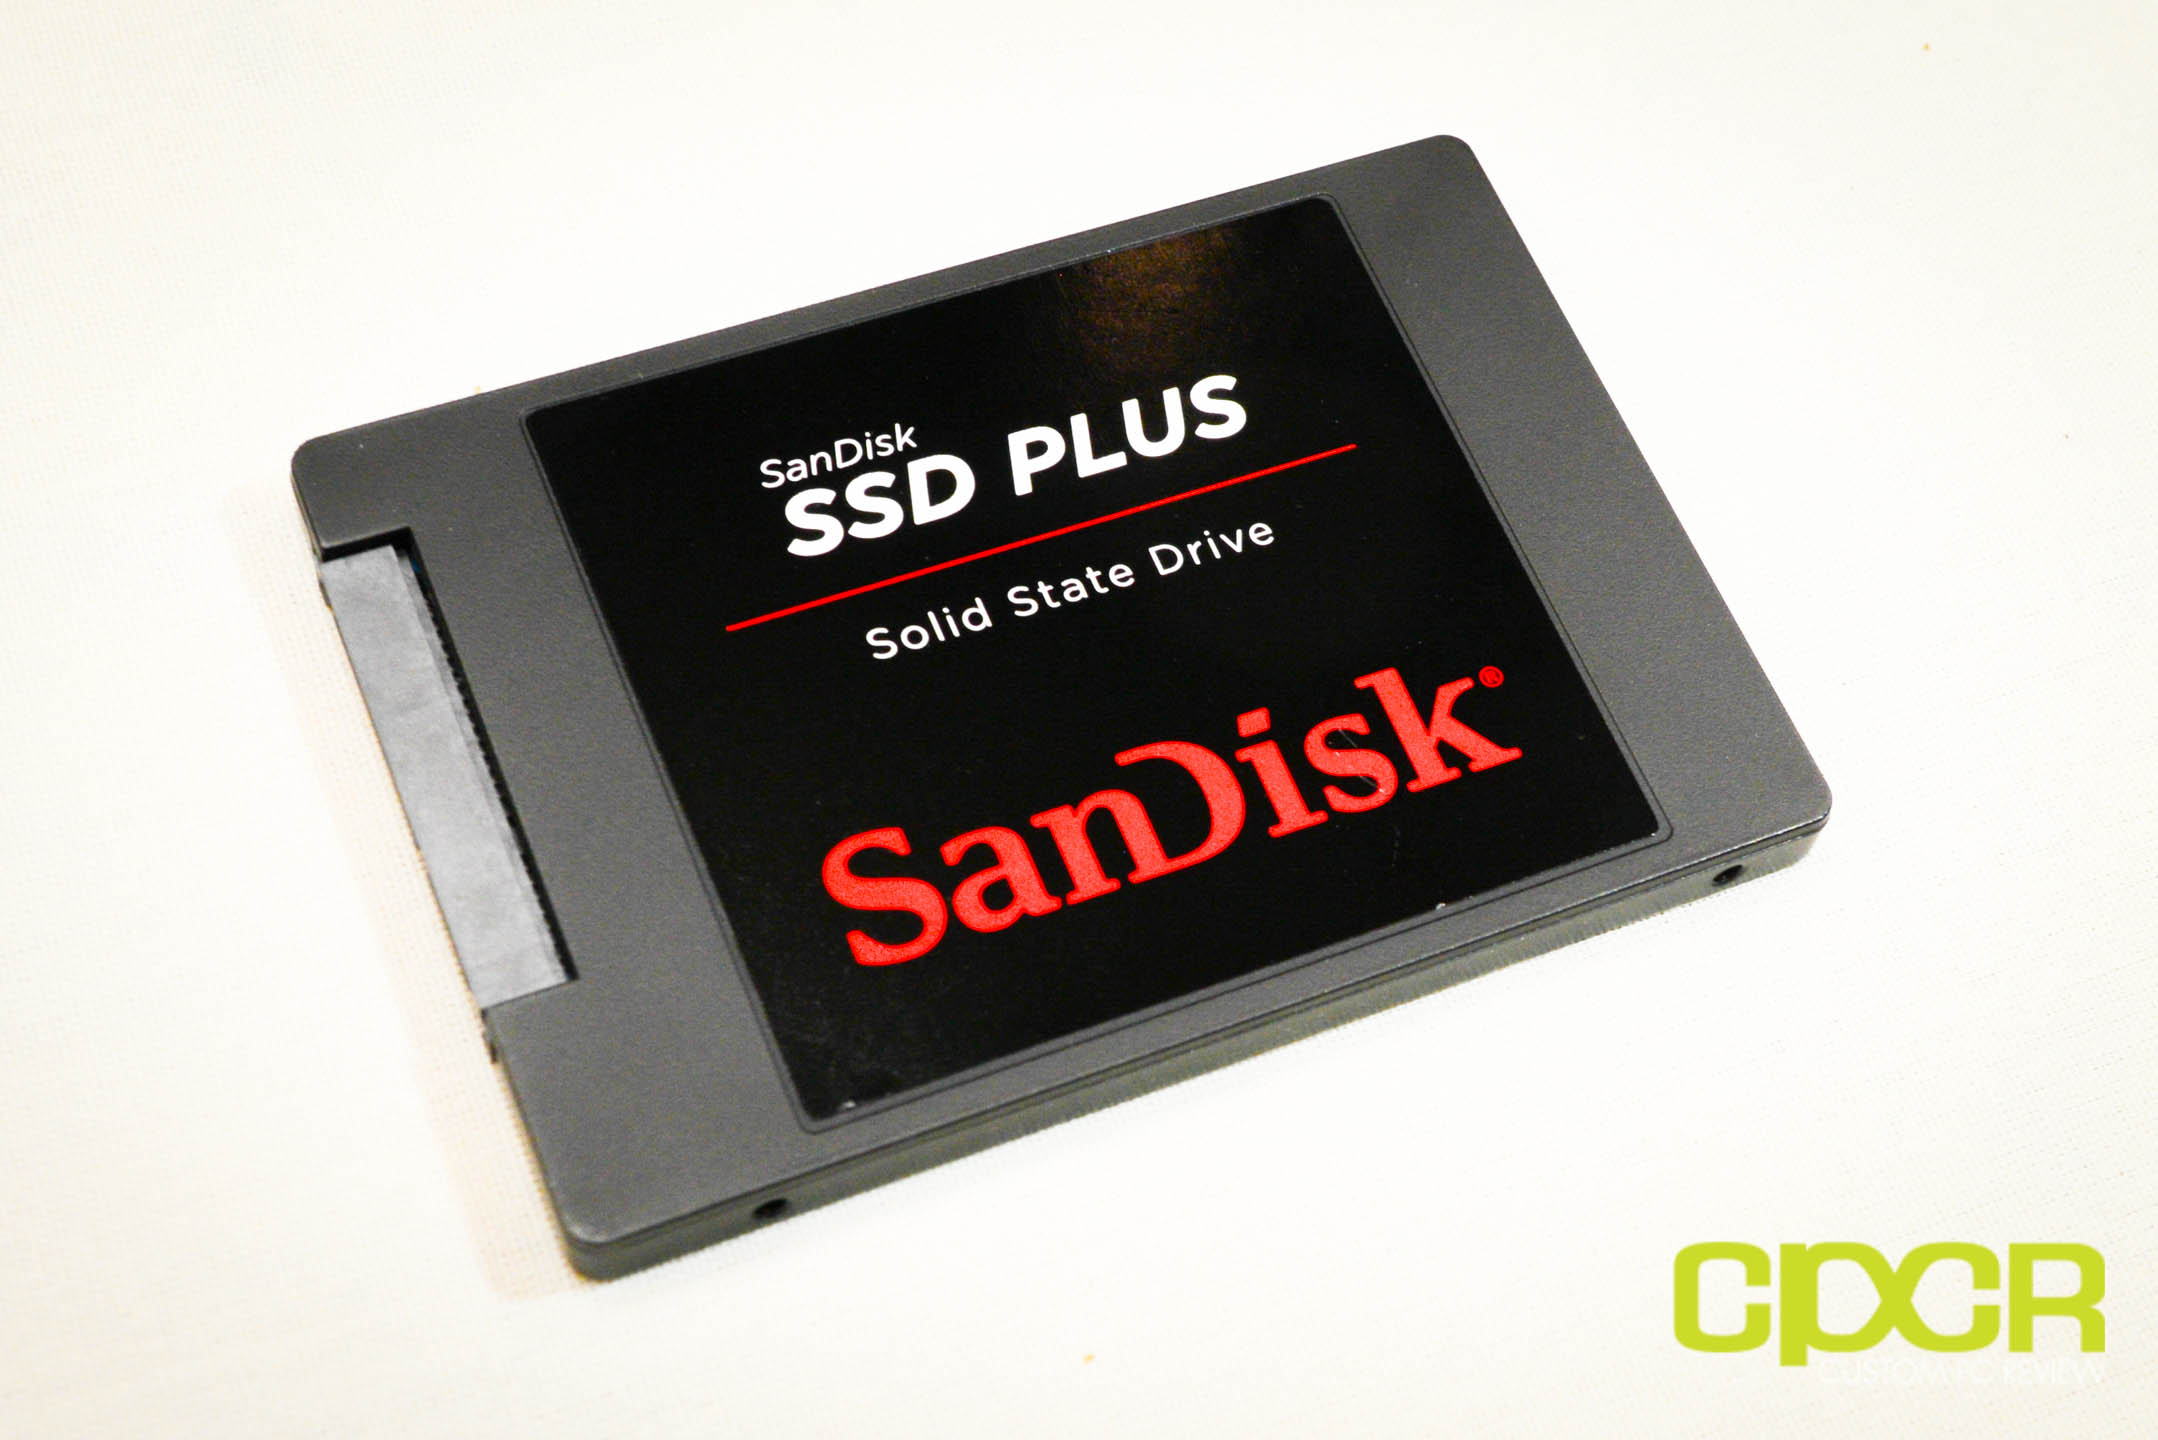 Storage Visions 2015: SanDisk SSD Plus, mSATA Ultra II SSDs